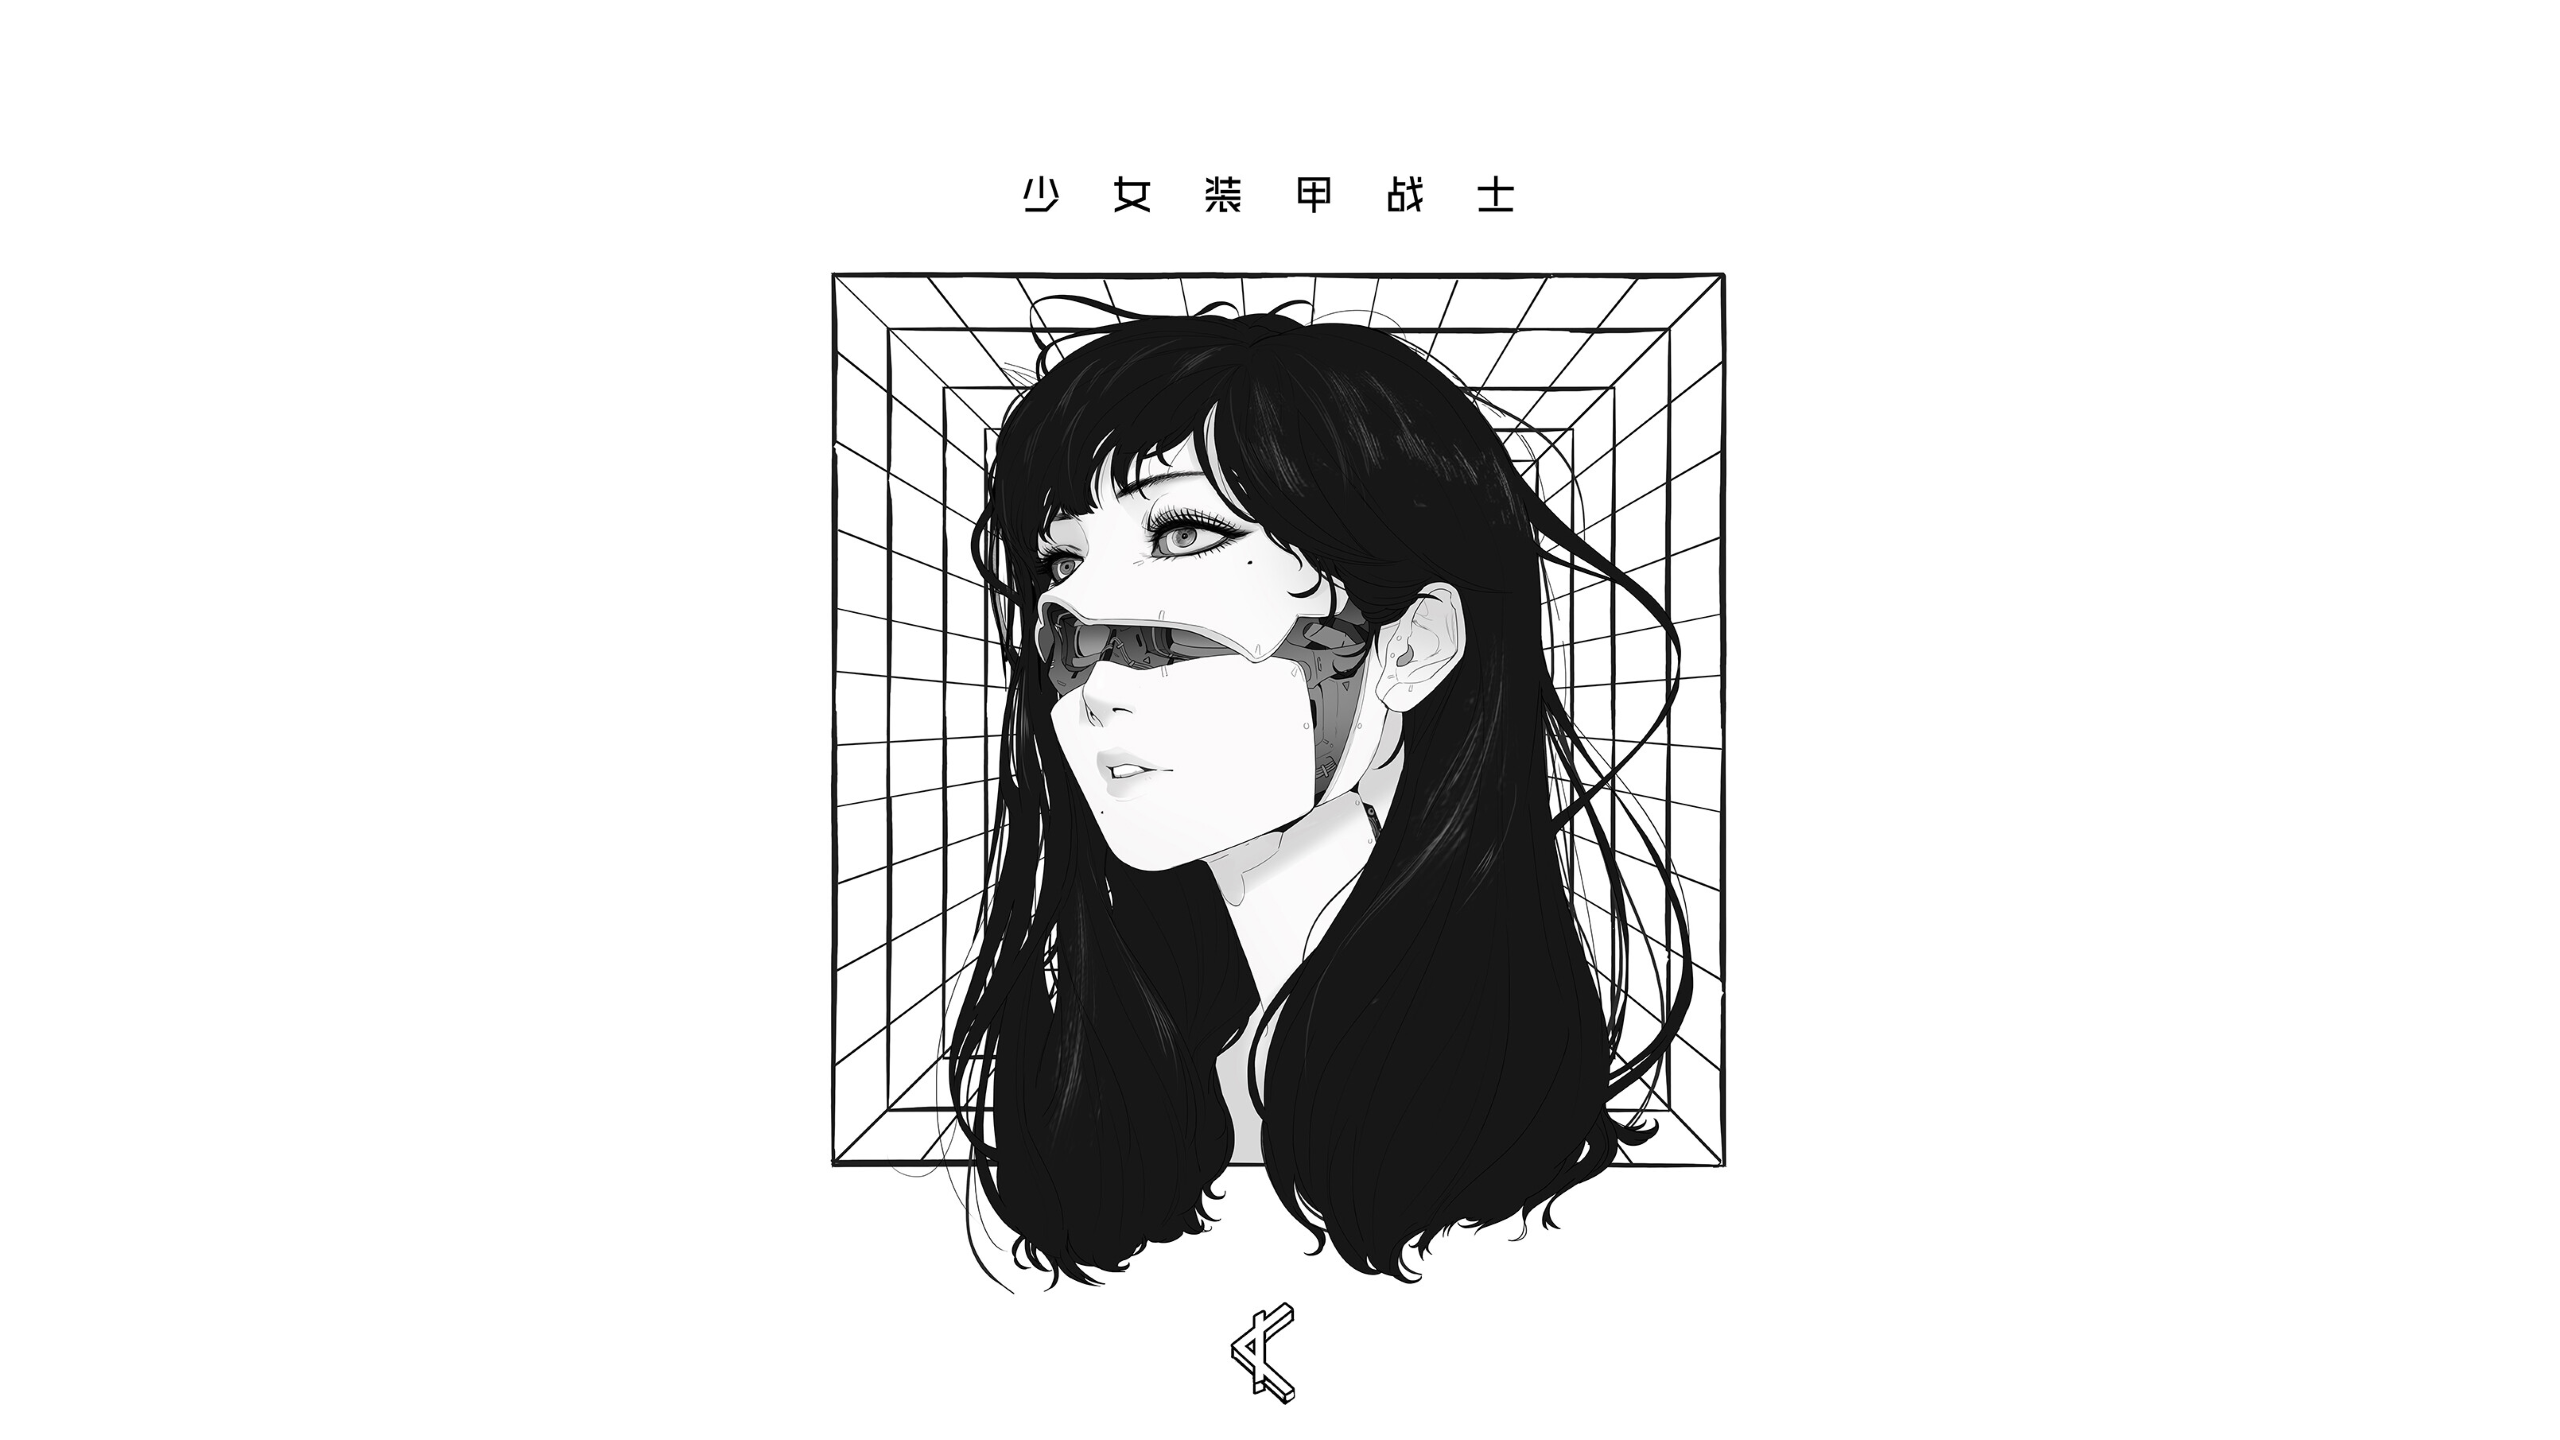 Park JunKyu Women Cyborg Futuristic Cyberpunk Black Hair Face Looking Away Artwork Drawing White Bac 2560x1440